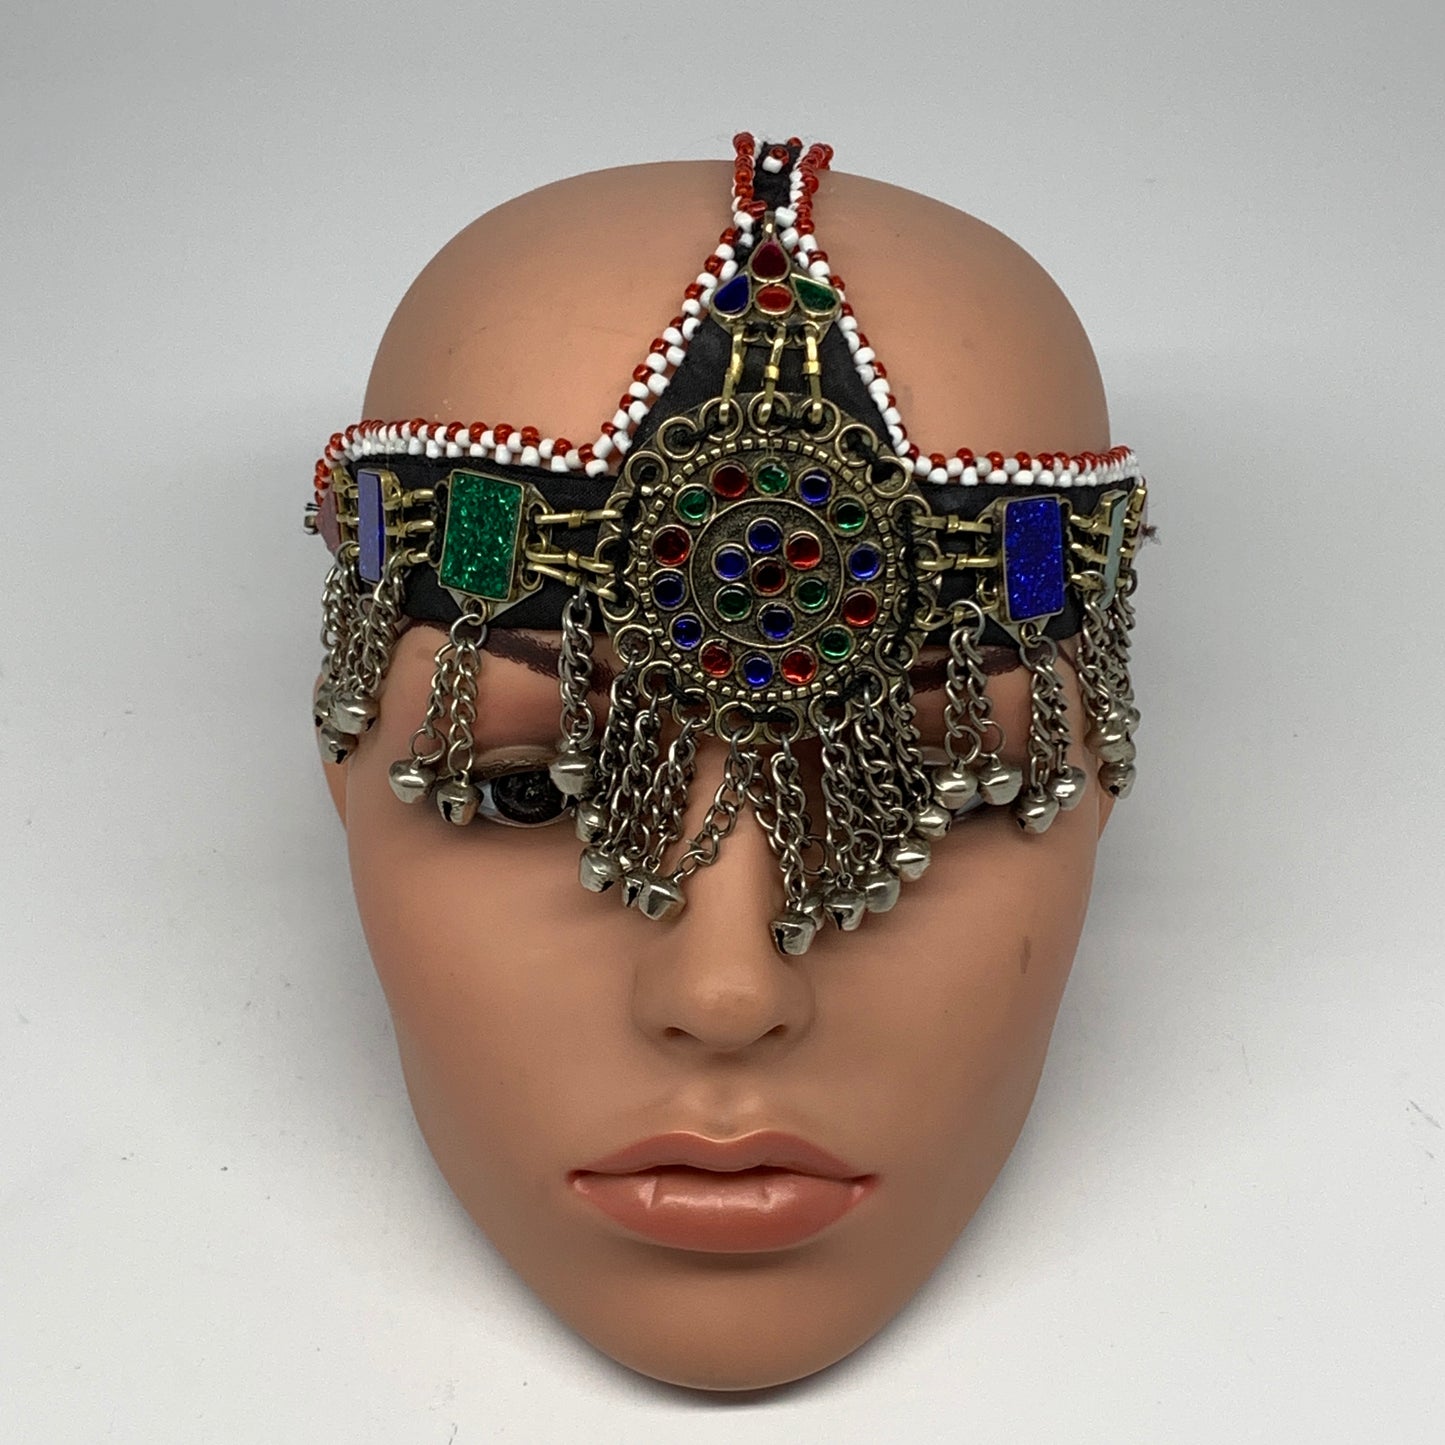 85g, Kuchi Headdress Headpiece Afghan Ethnic Tribal Jingle Bells @Afghanistan, B